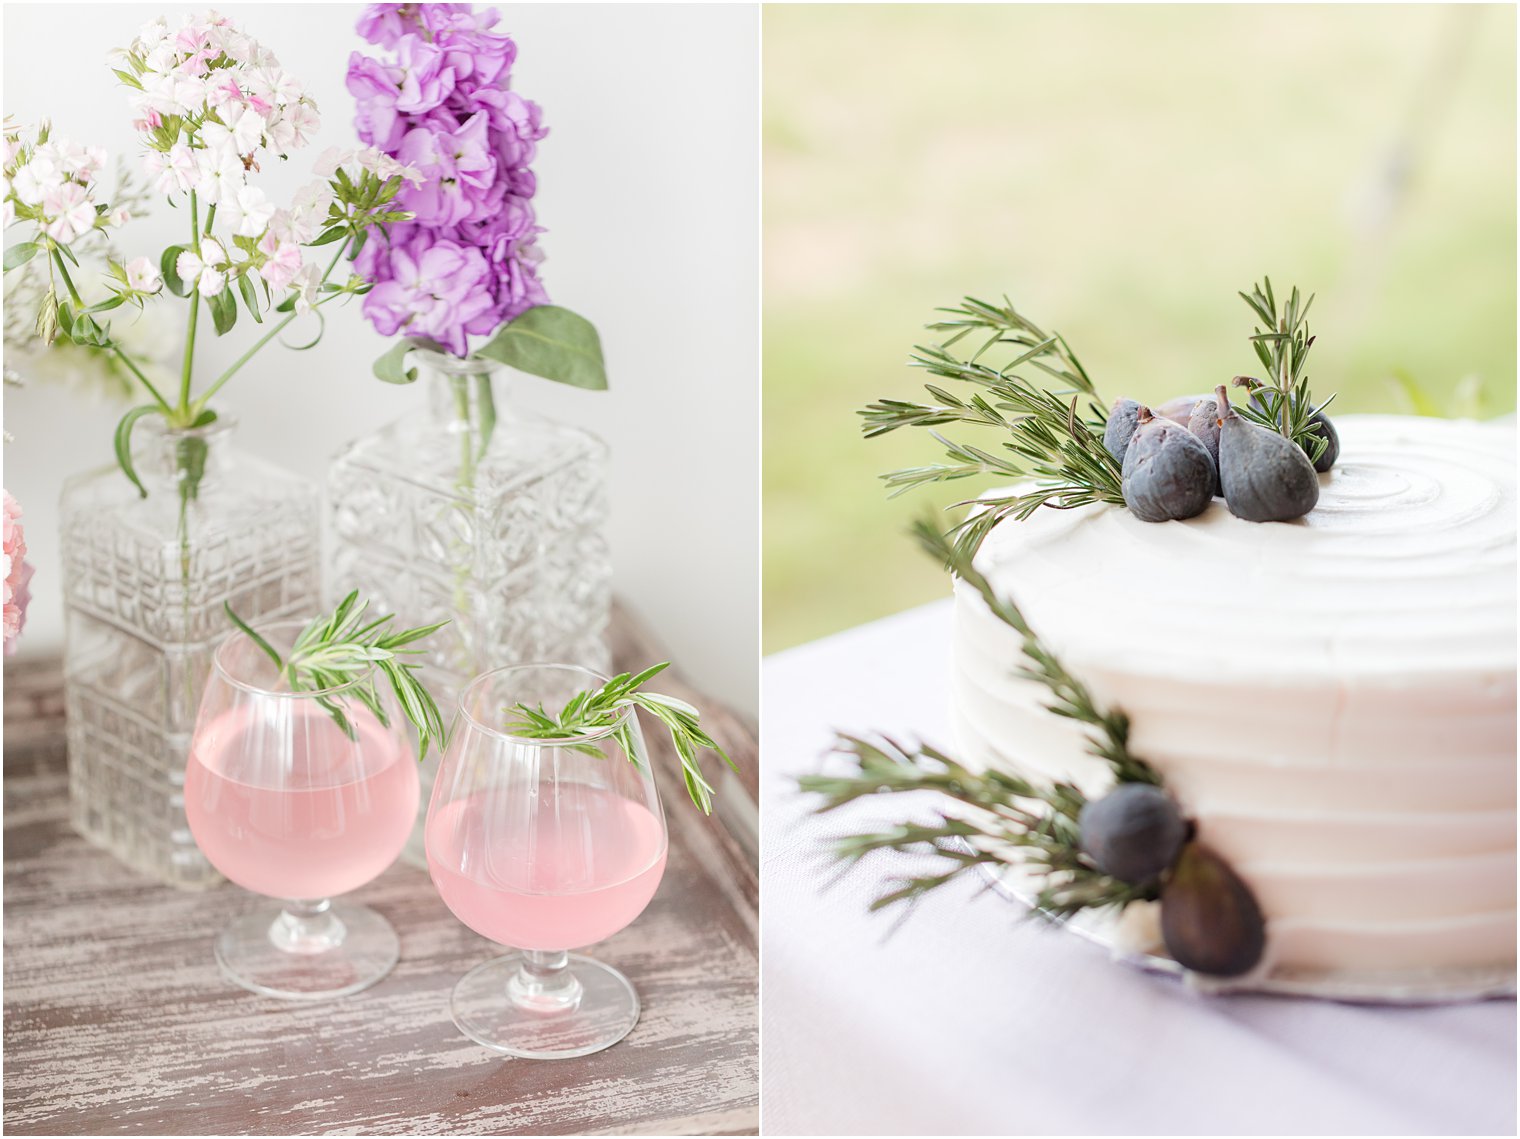 rosemary drinks and fig wedding cake for wedding minimony at Tyler Gardens